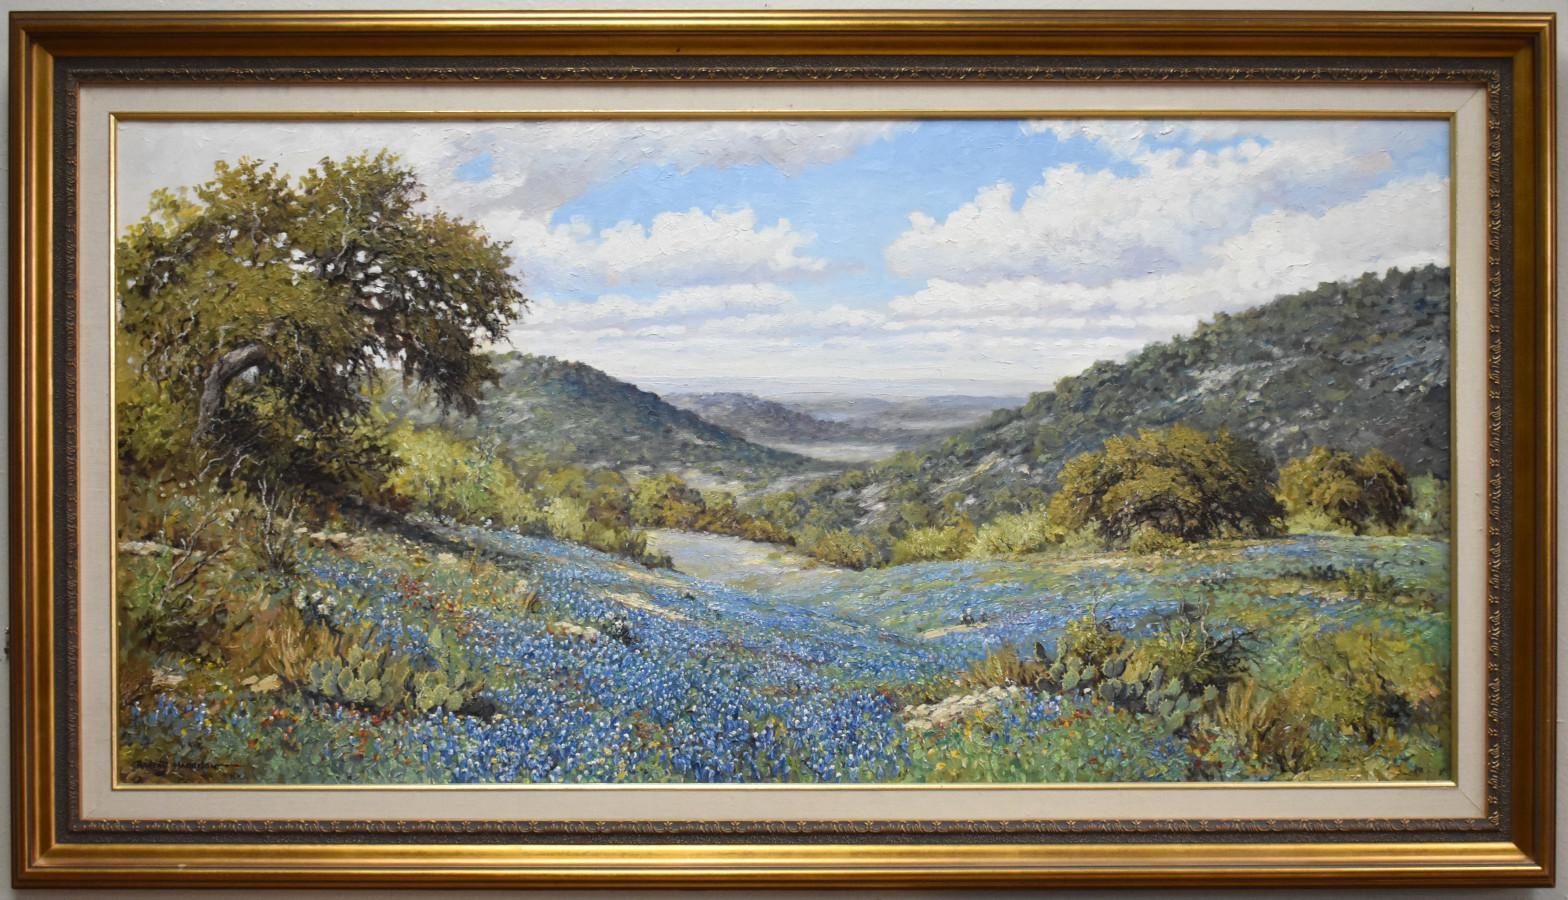 Robert Harrison Landscape Painting - "BLUEBONNETS VALLEY" TEXAS HILL COUNTRY FRAMED 31 X 55 BORN 1949 HEAVY IMPASTO